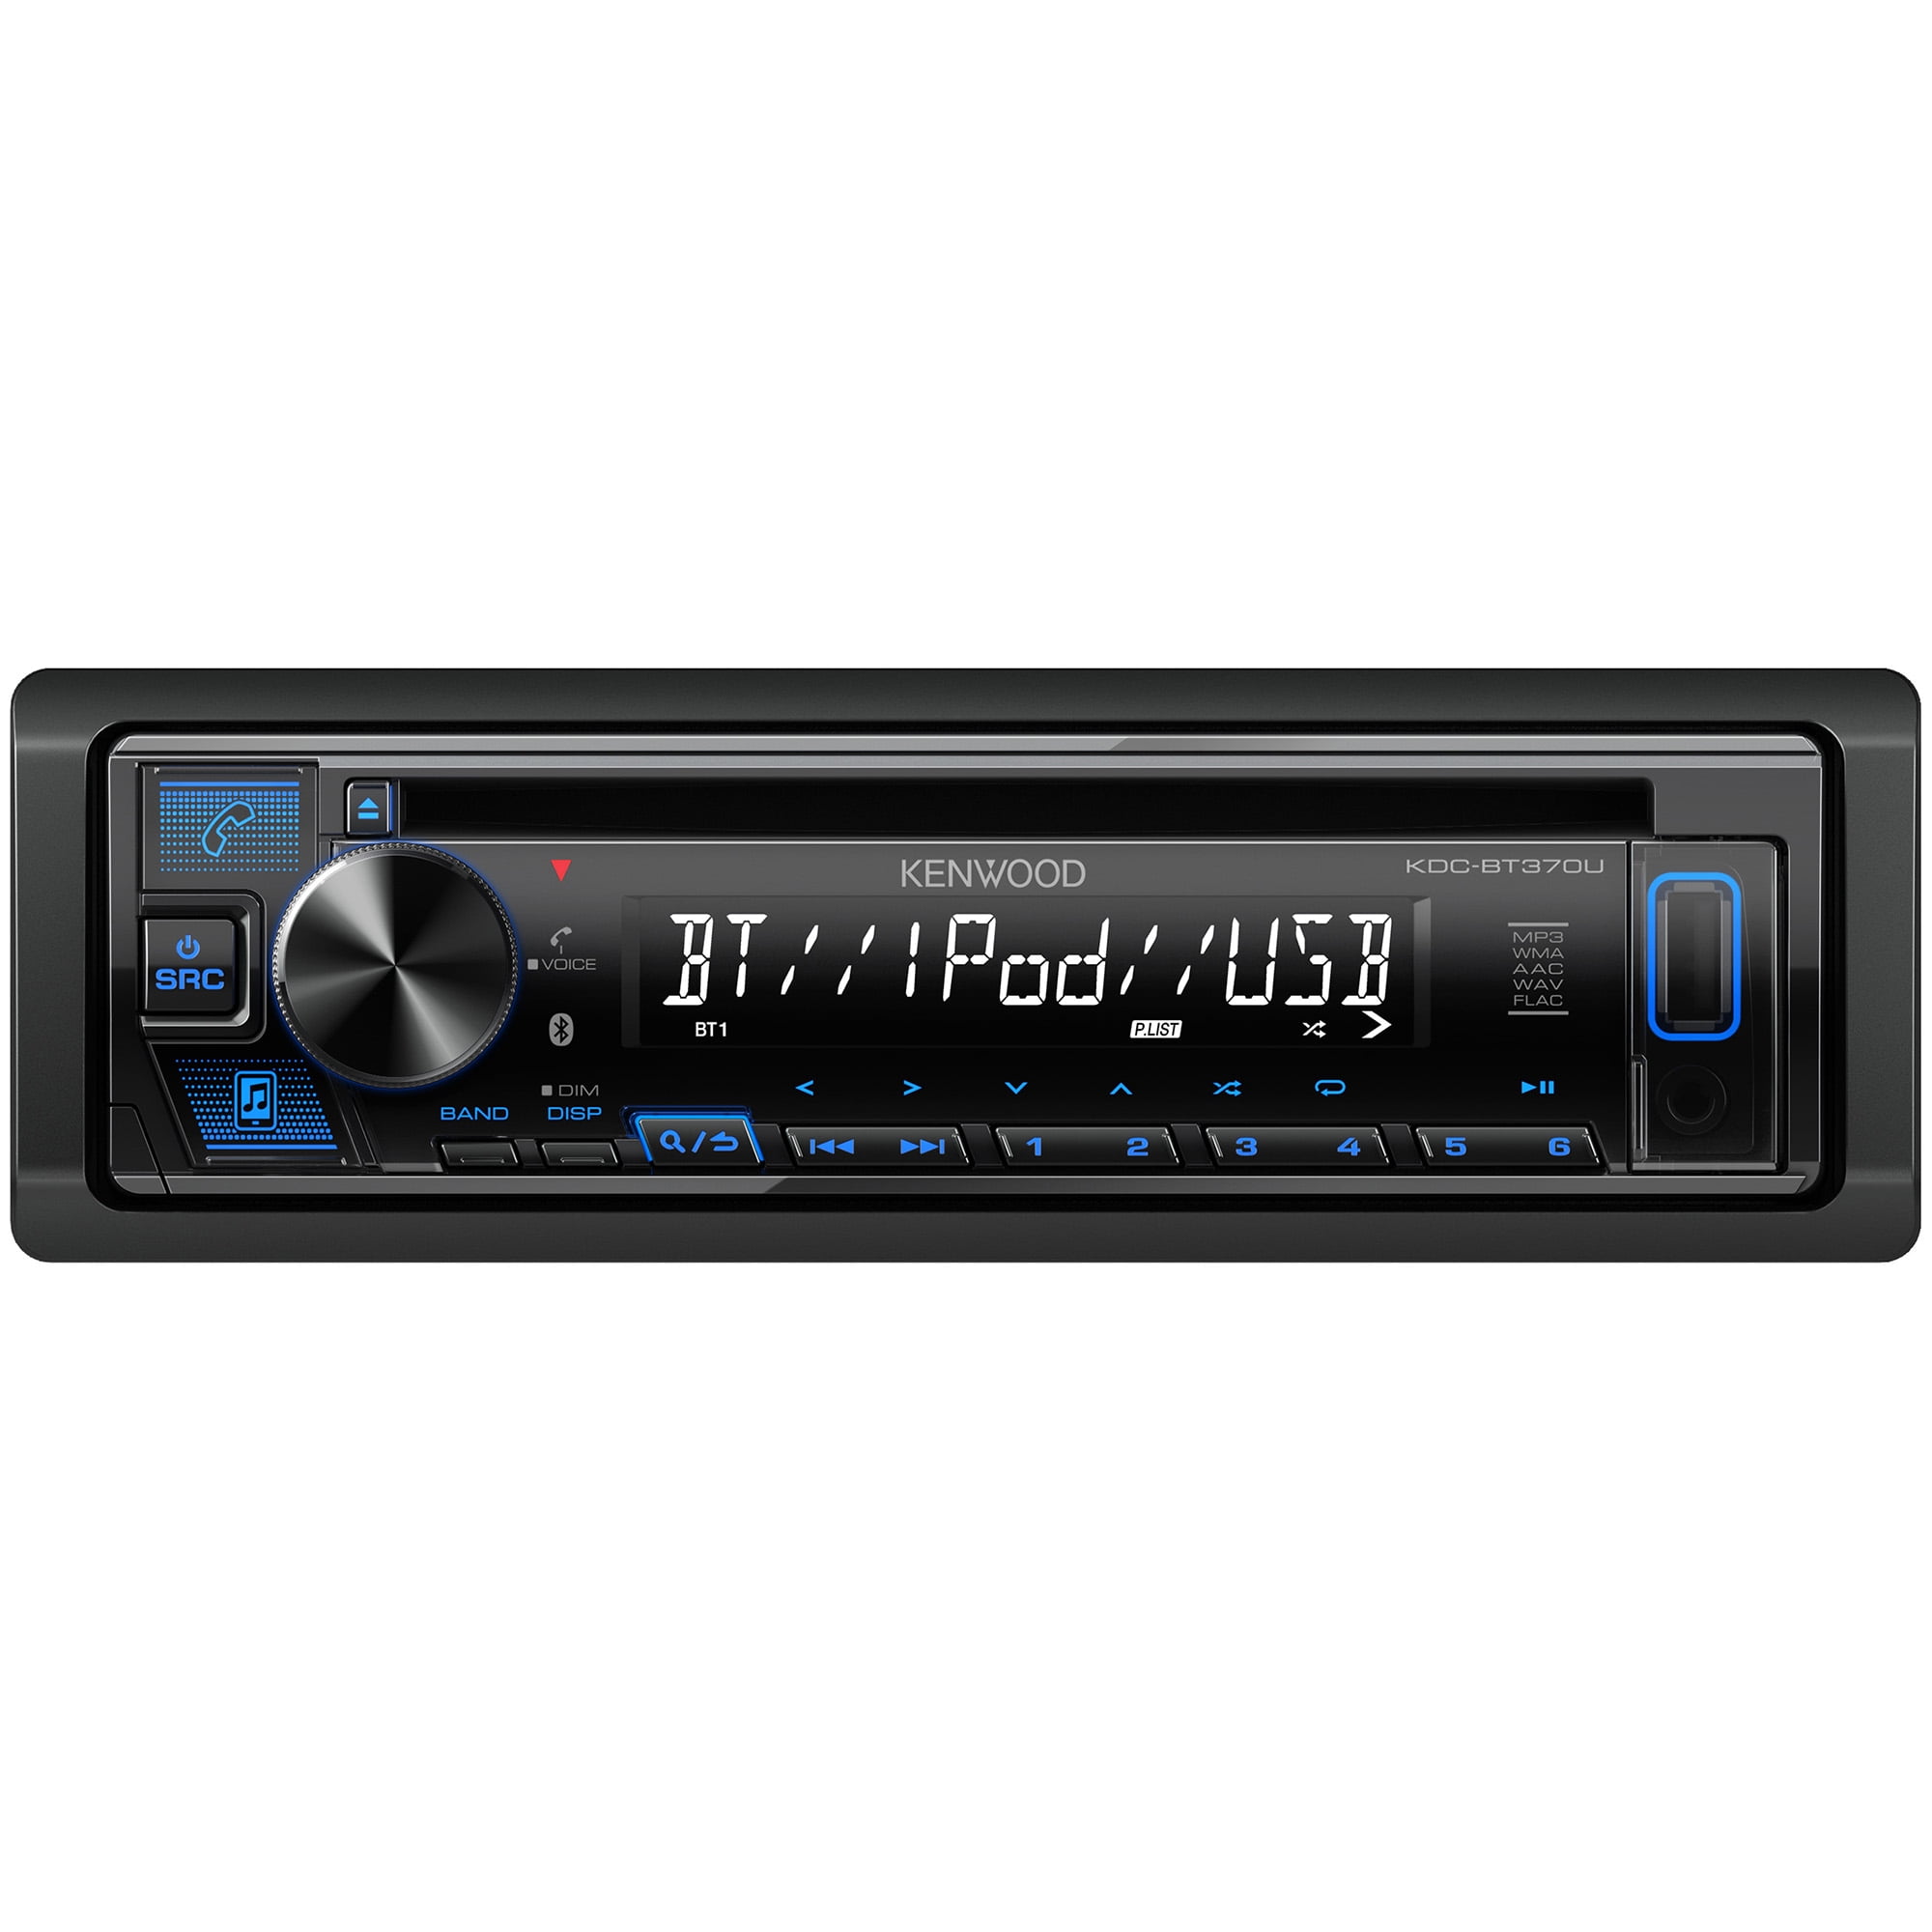 KENWOOD KDC-BT370U CD Car Stereo Receiver with Bluetooth, AM/FM